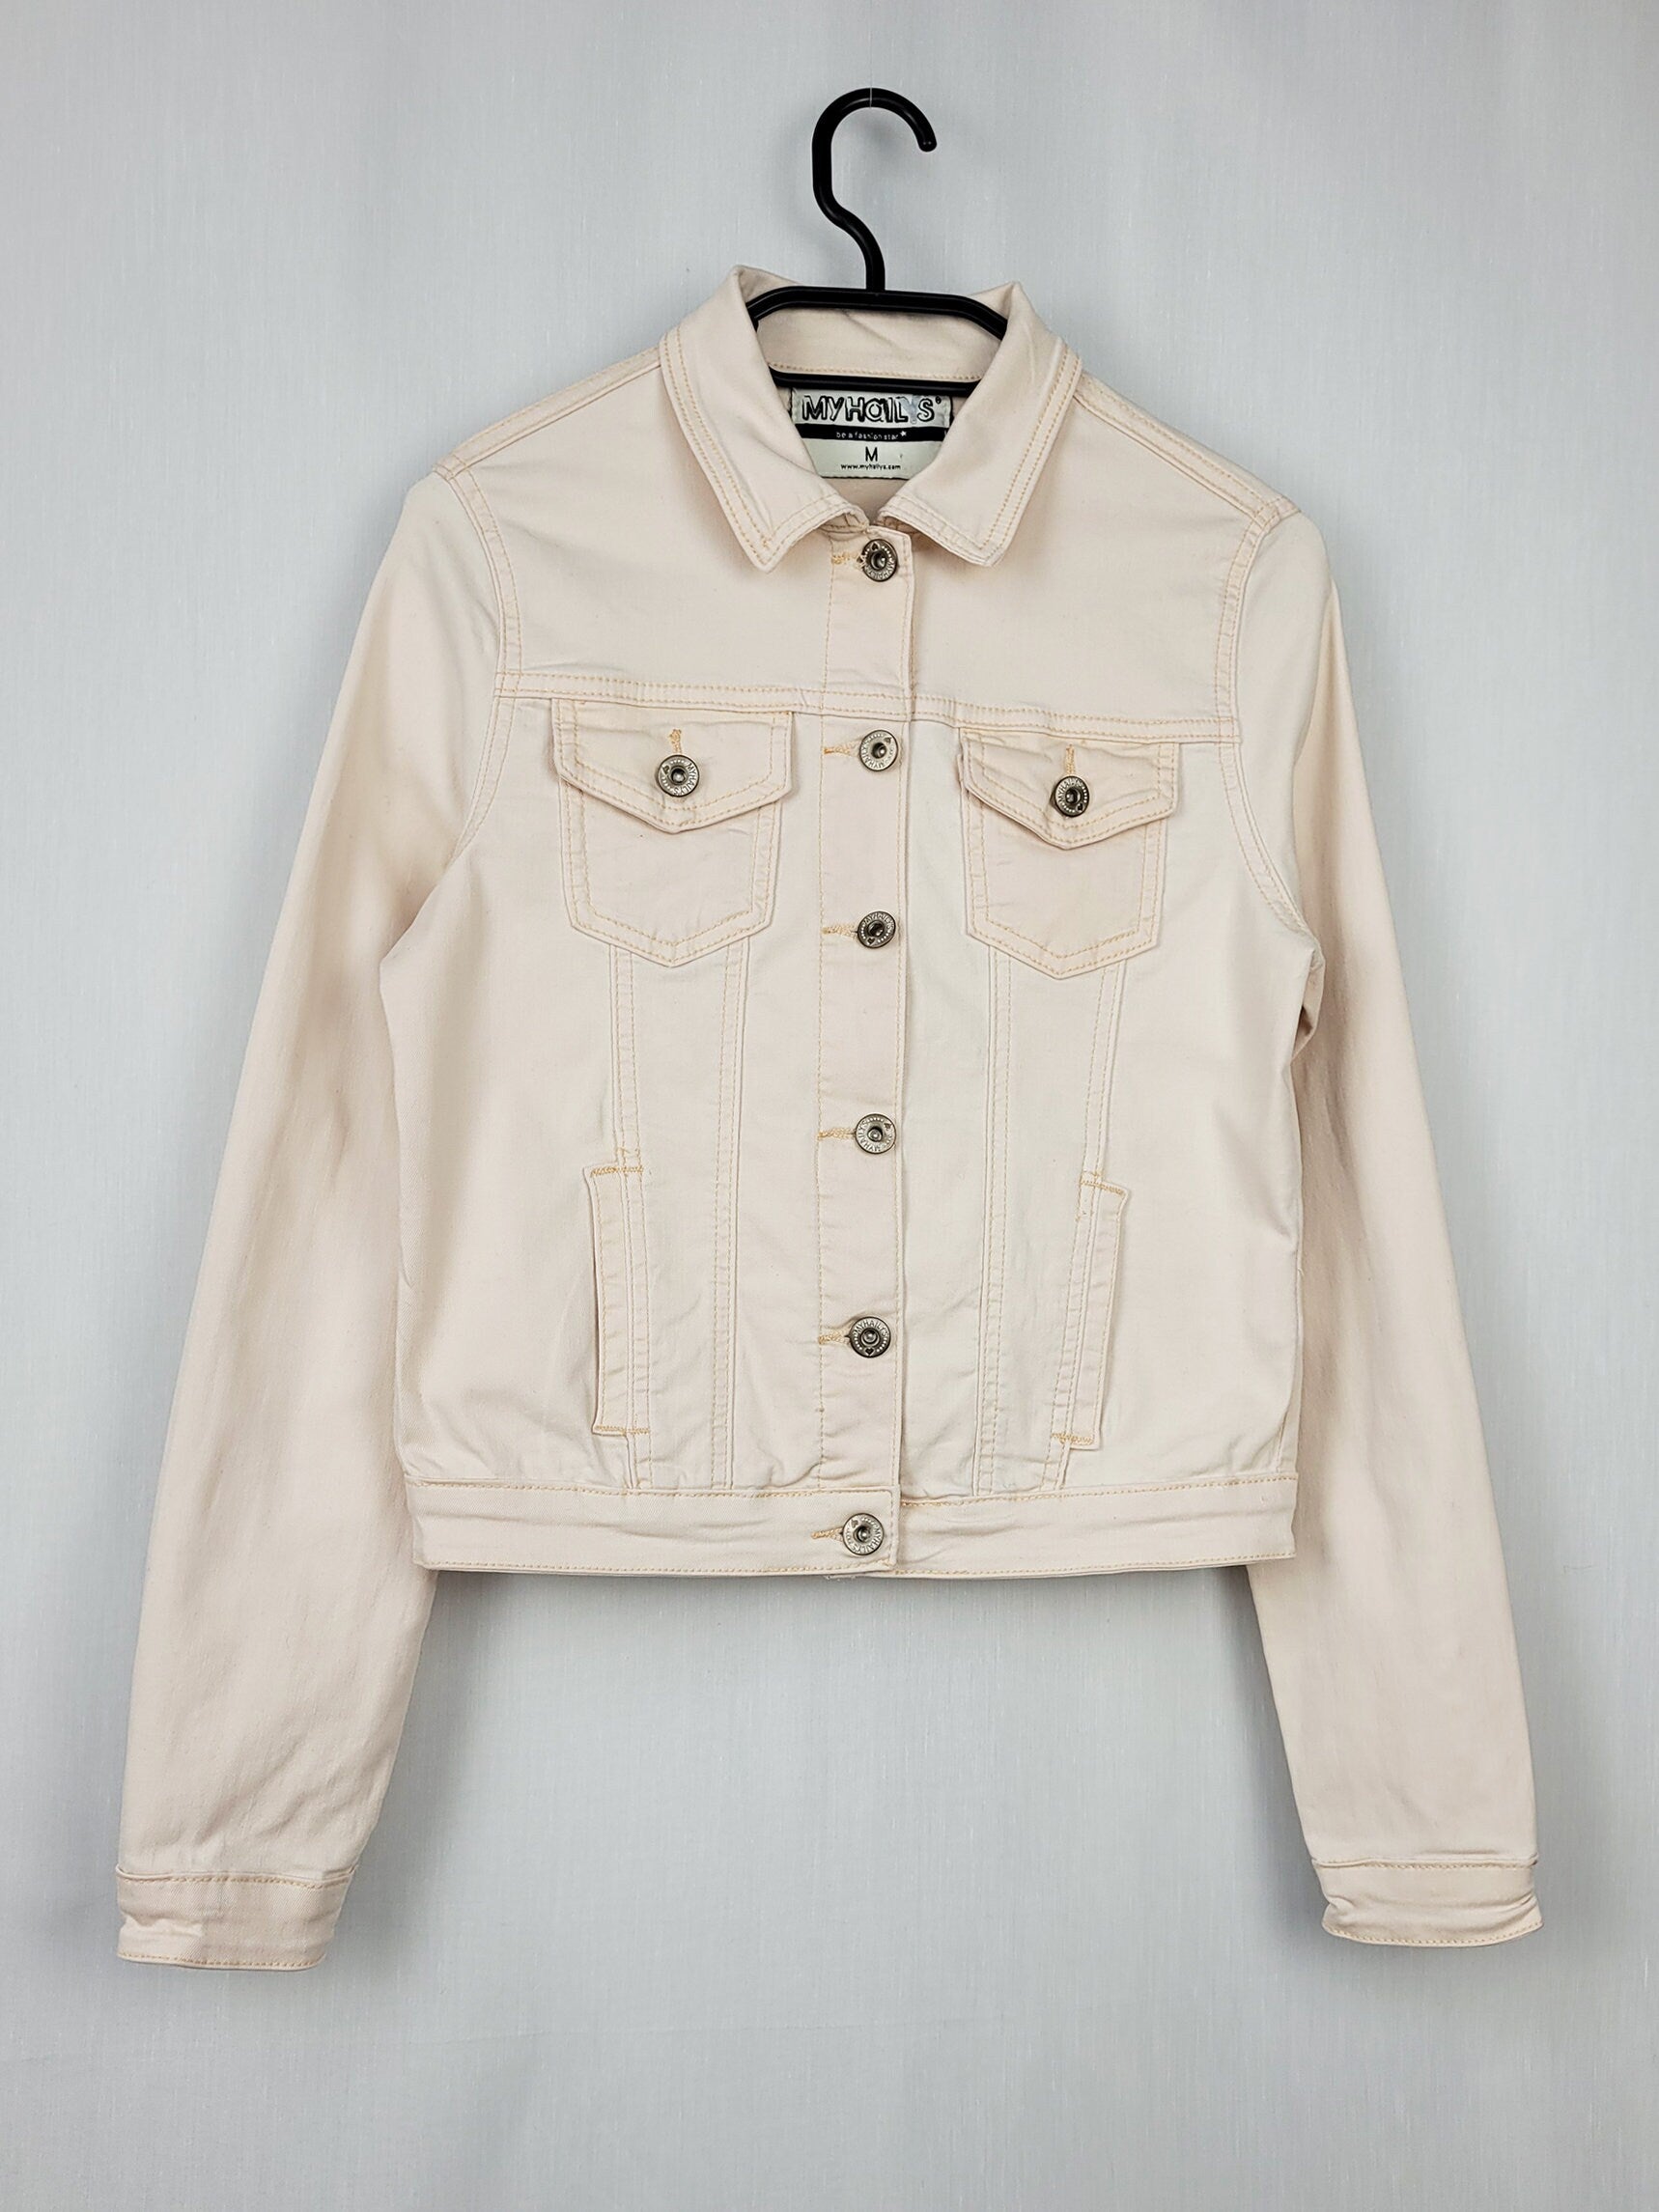 Vintage 00s light pastel pink jeans button down jacket